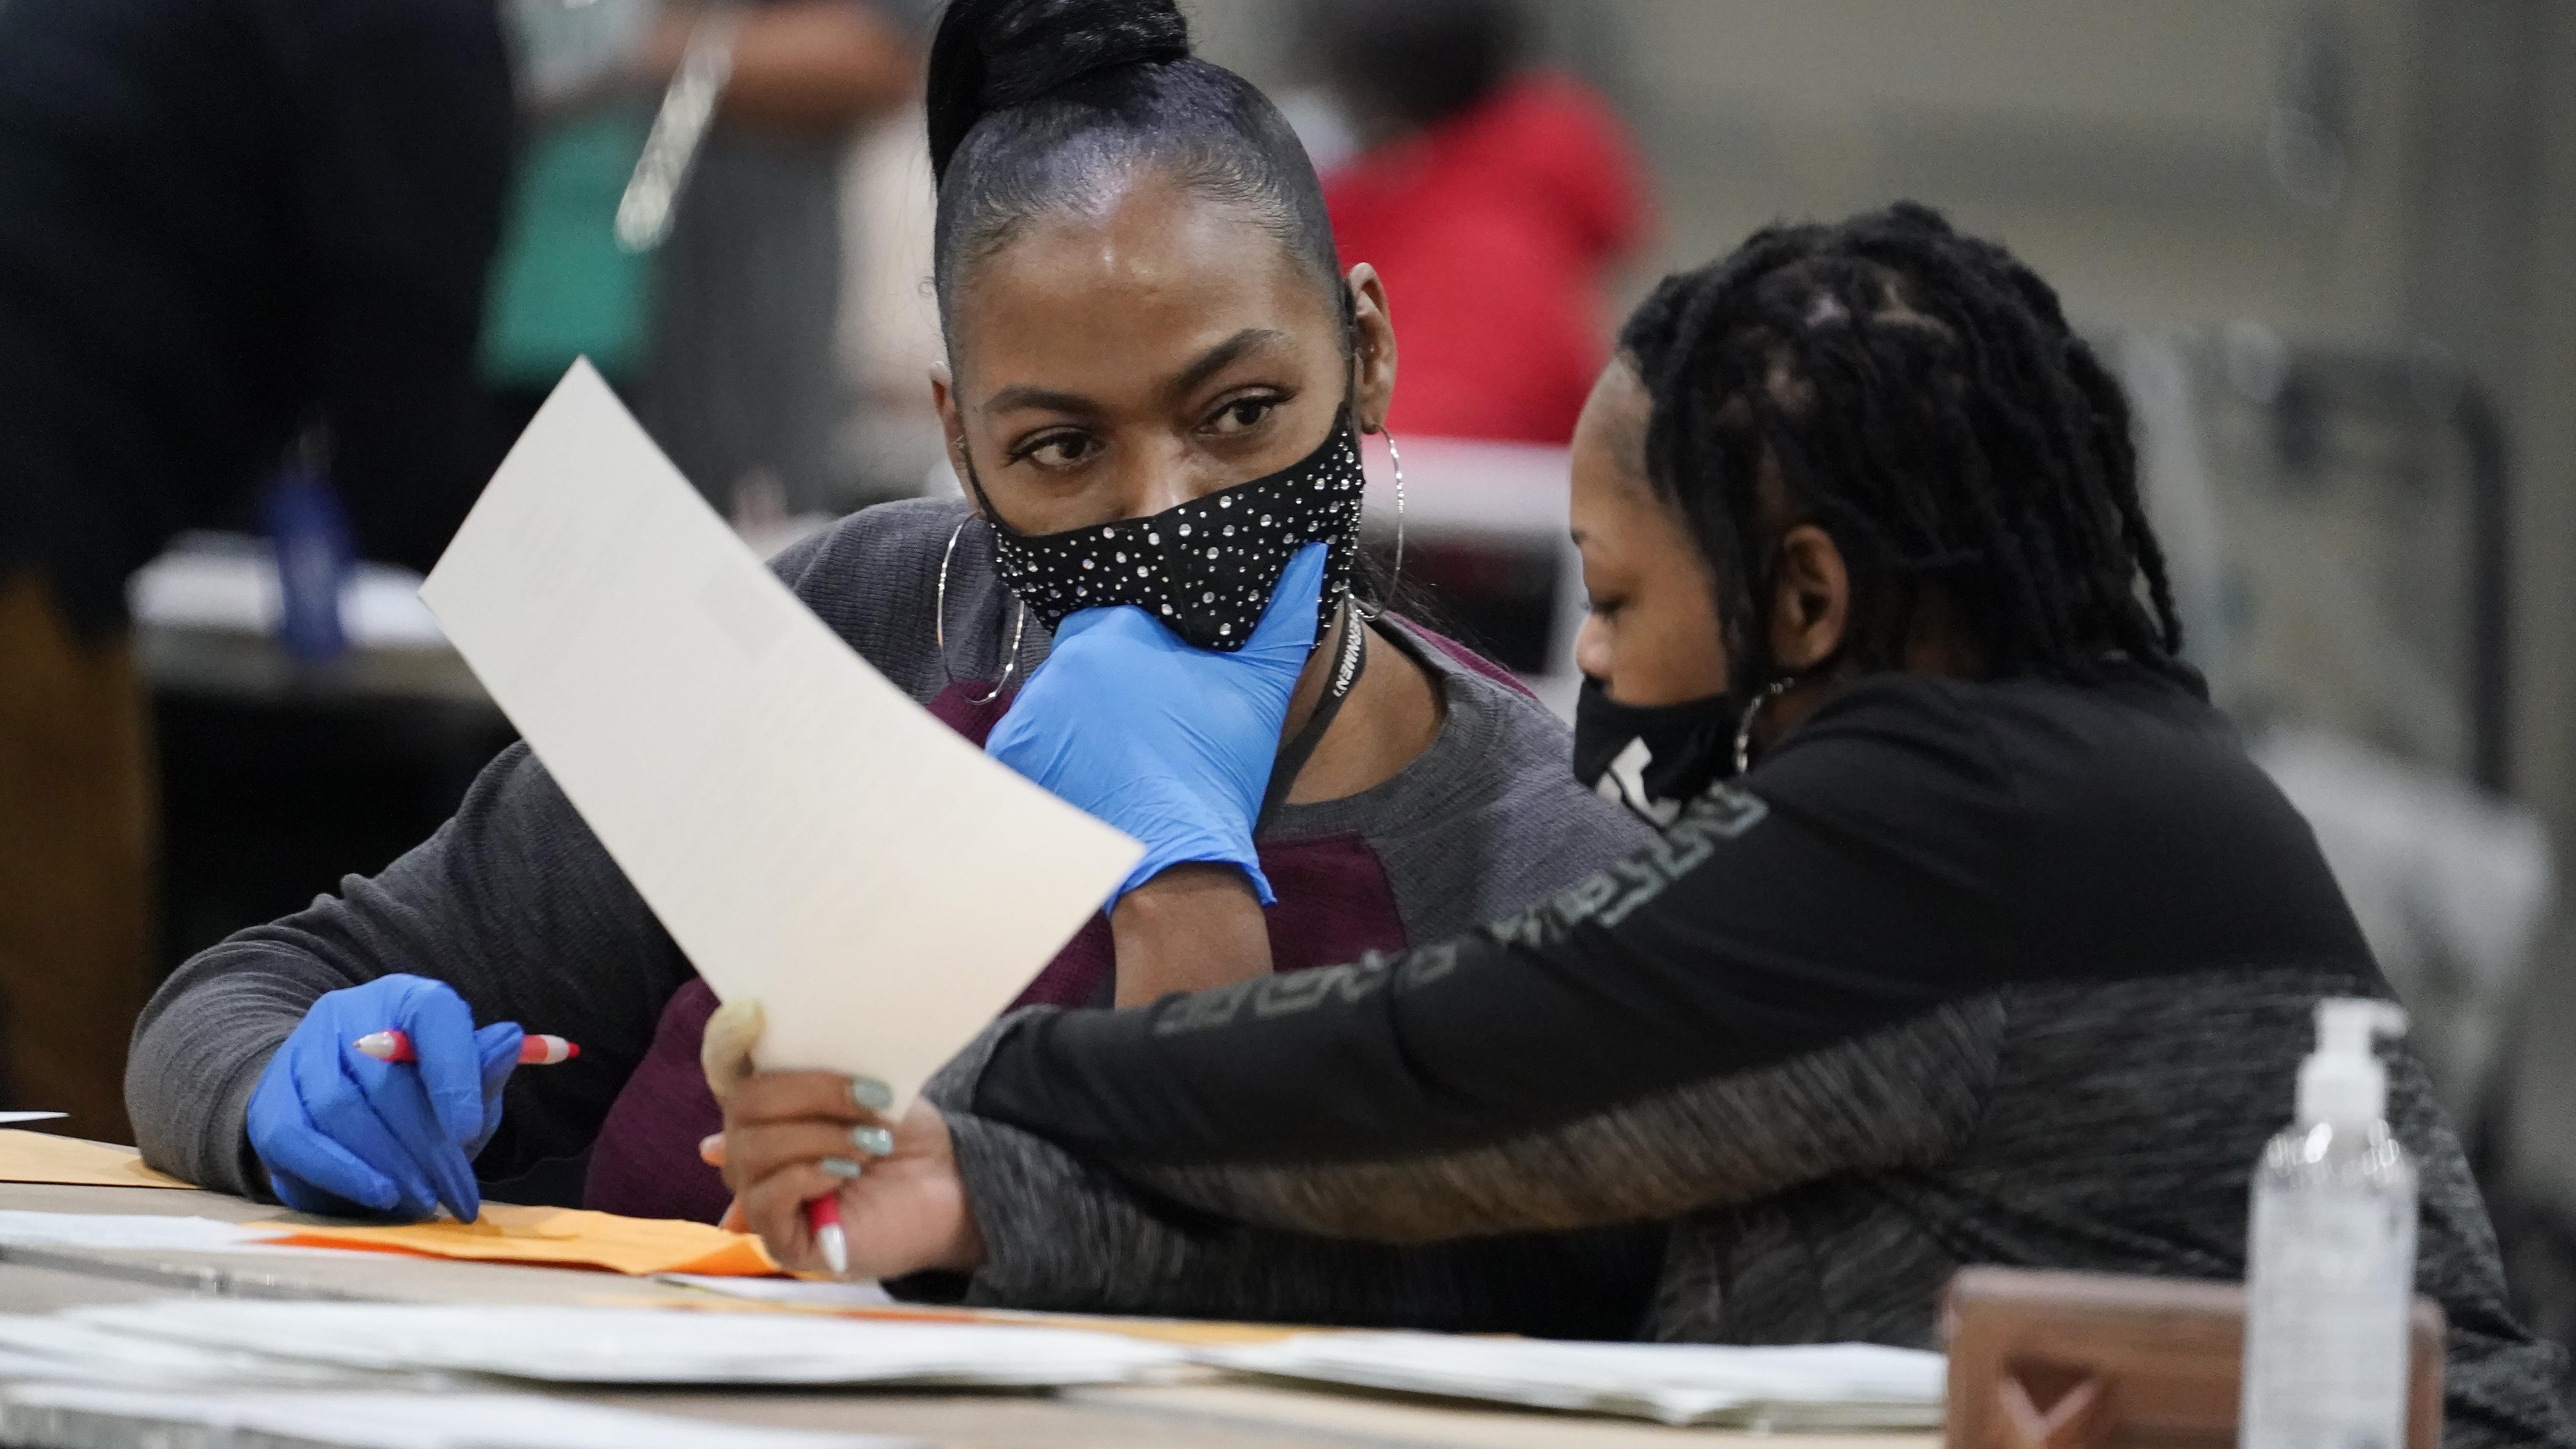 Officials sort ballots during an audit at the Georgia World Congress Center on Saturday, Nov. 14, 2020, in Atlanta.